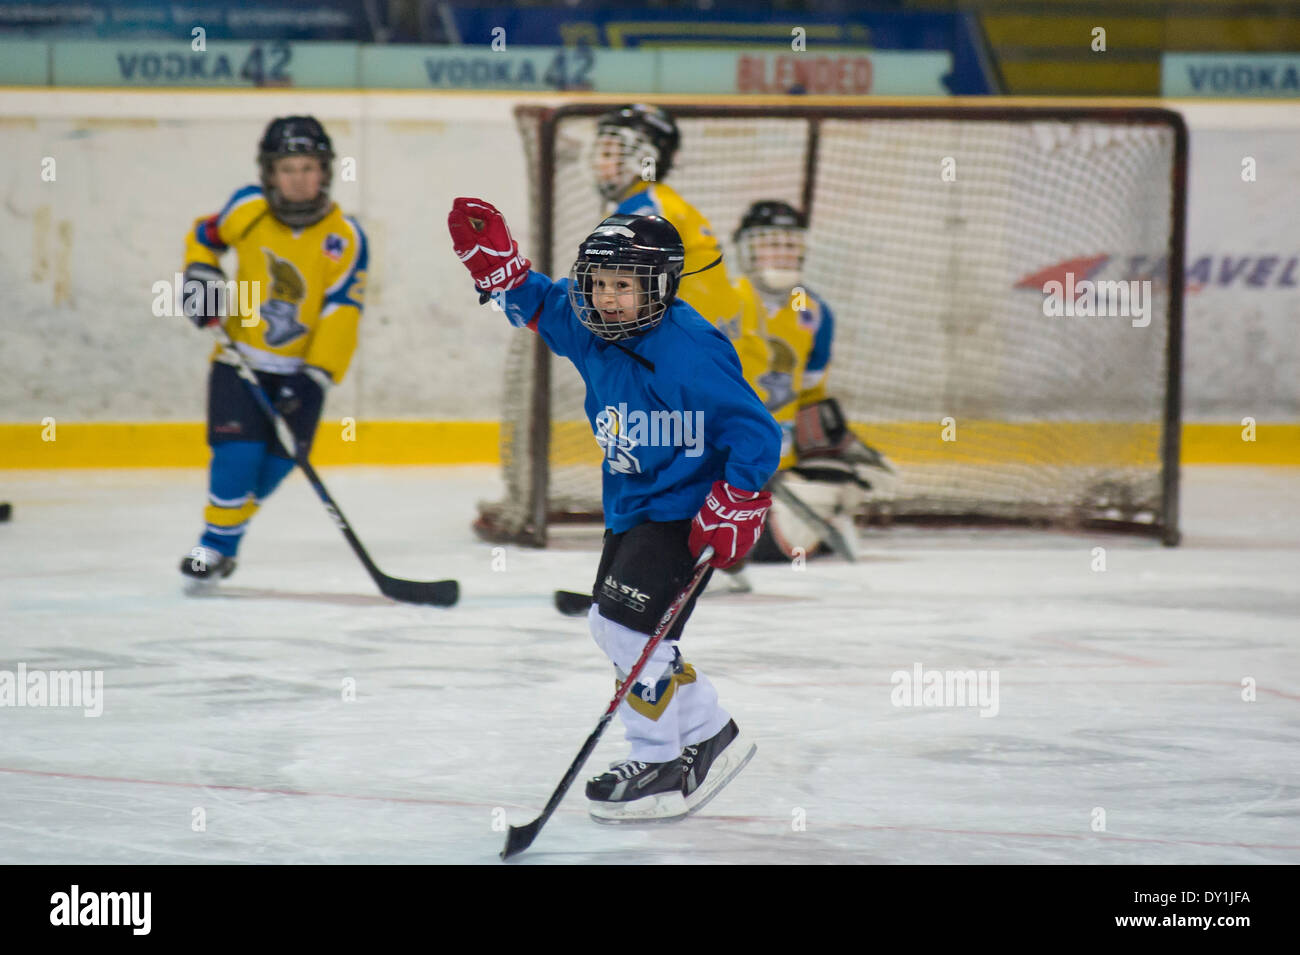 baby-boy ice hockey player celebrates goal Stock Photo